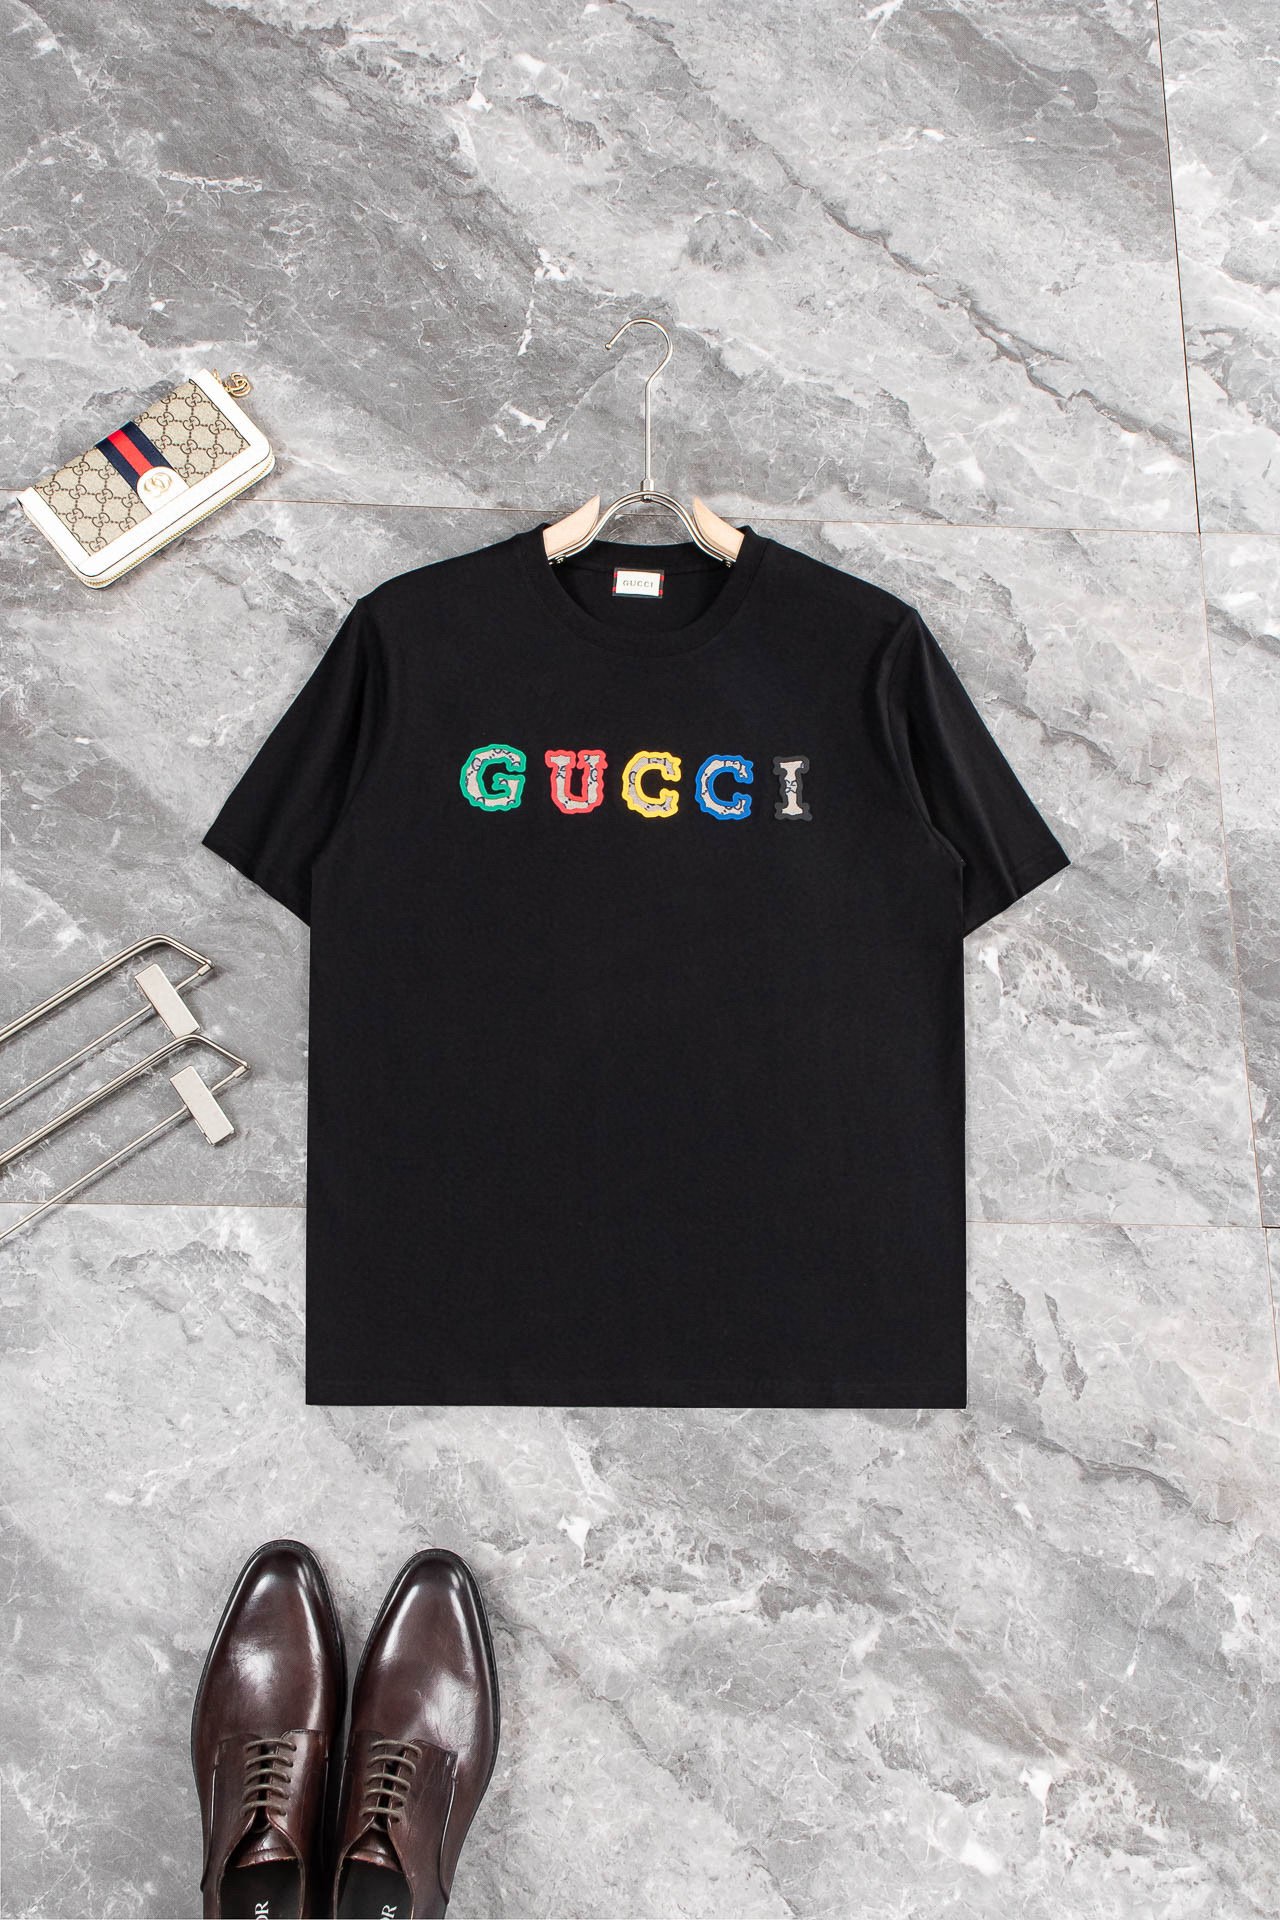 Gucci Clothing T-Shirt Cotton Short Sleeve